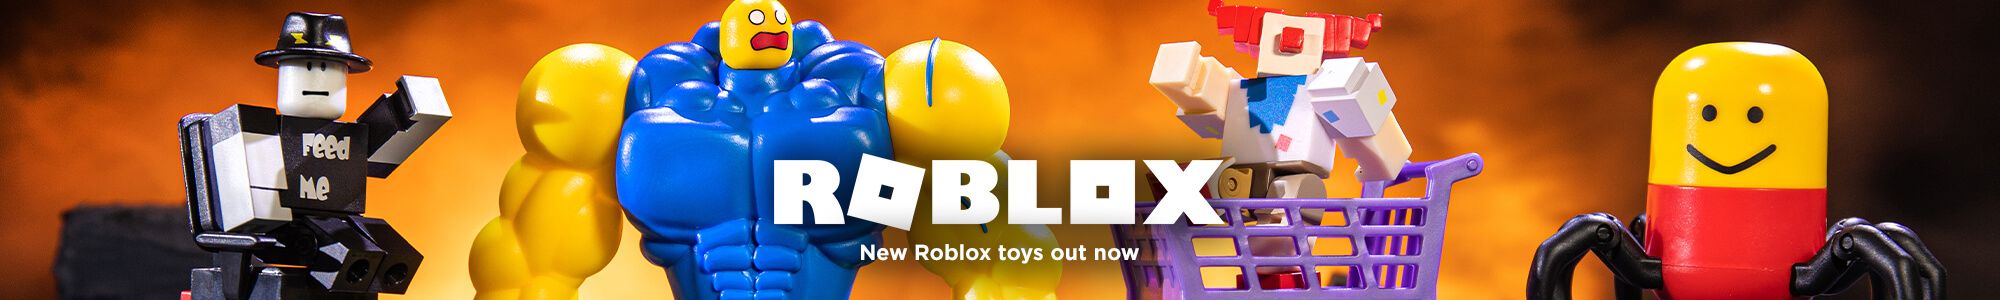 Roblox Roblox Toys Figures The Entertainer - yolo boba roblox